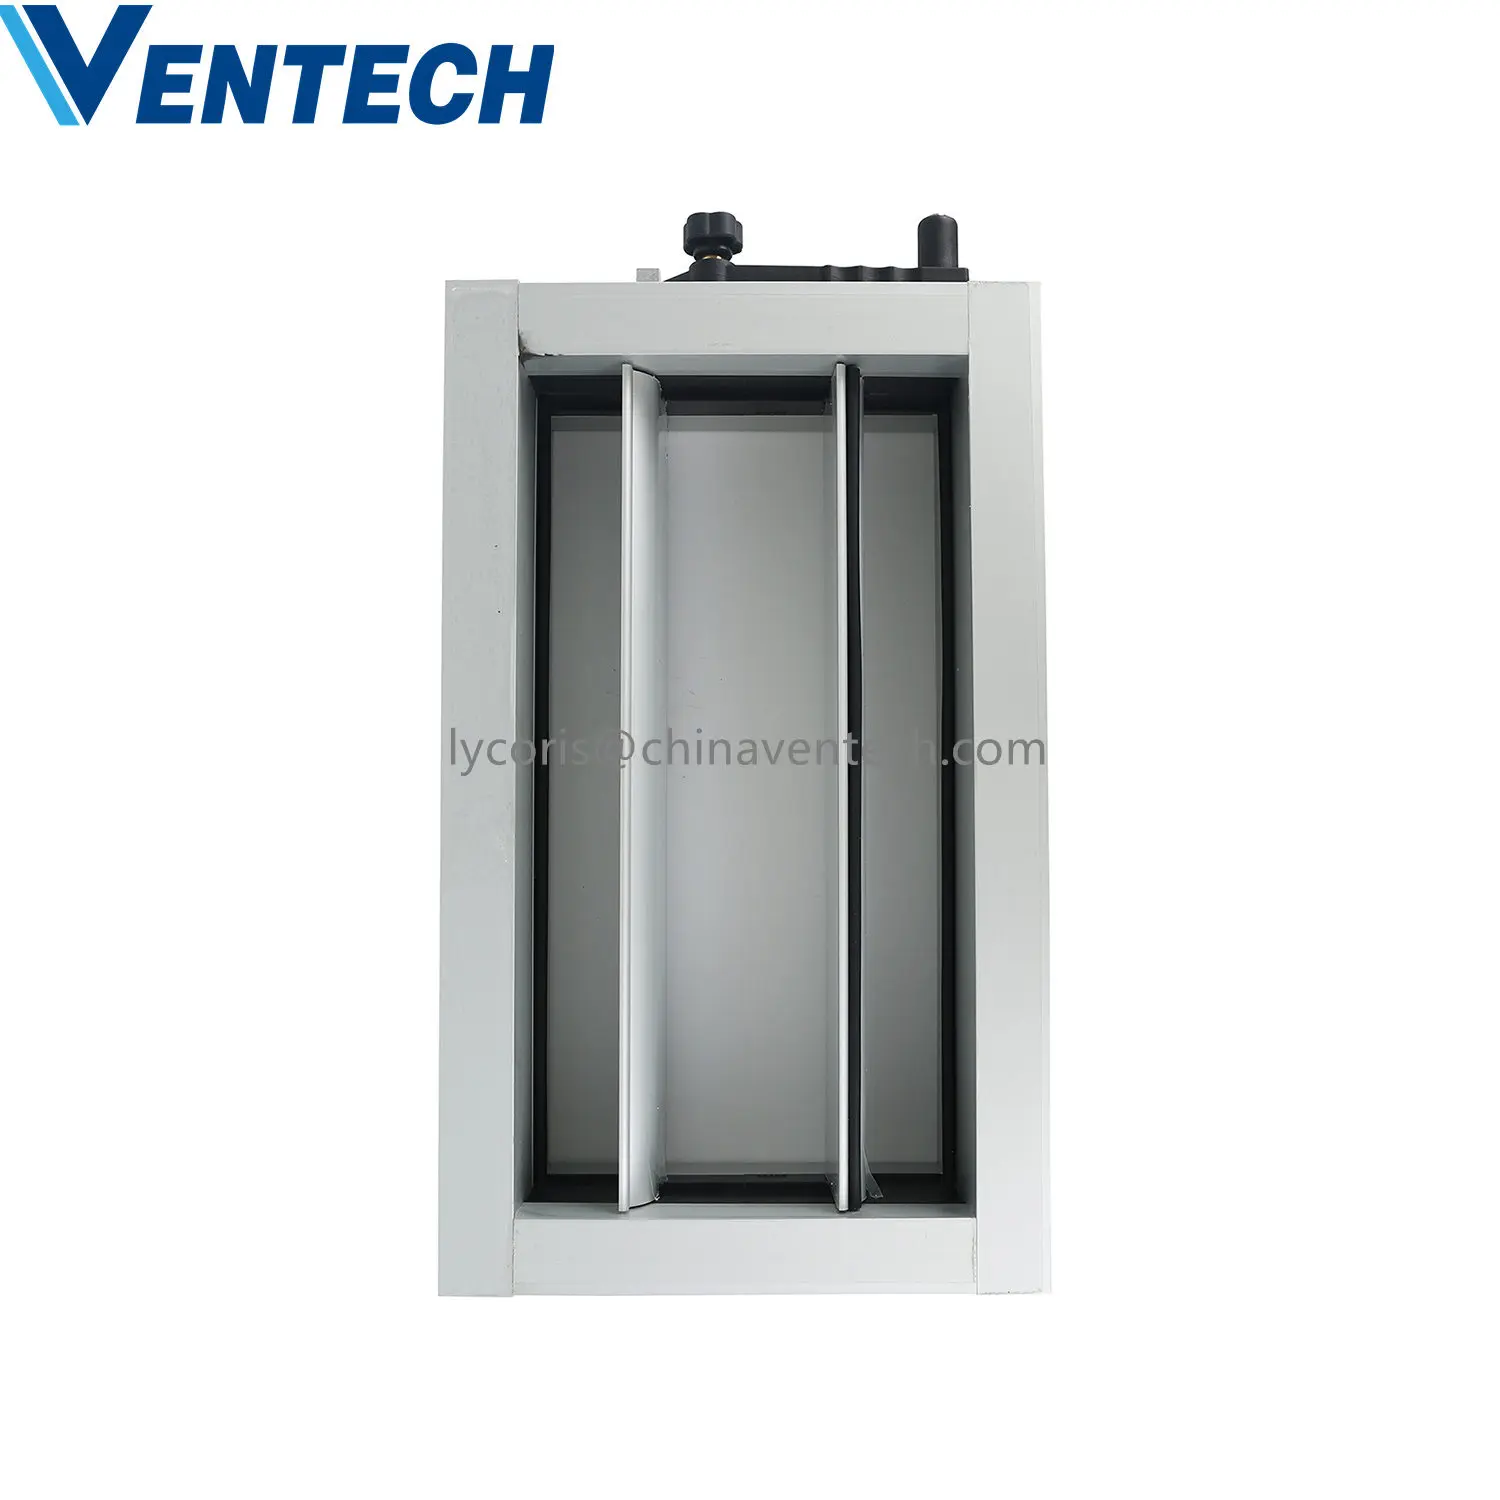 HVAC non return damper air duct manual volume control damper ceiling diffuser air VCD grilles and diffuser ventilation damper